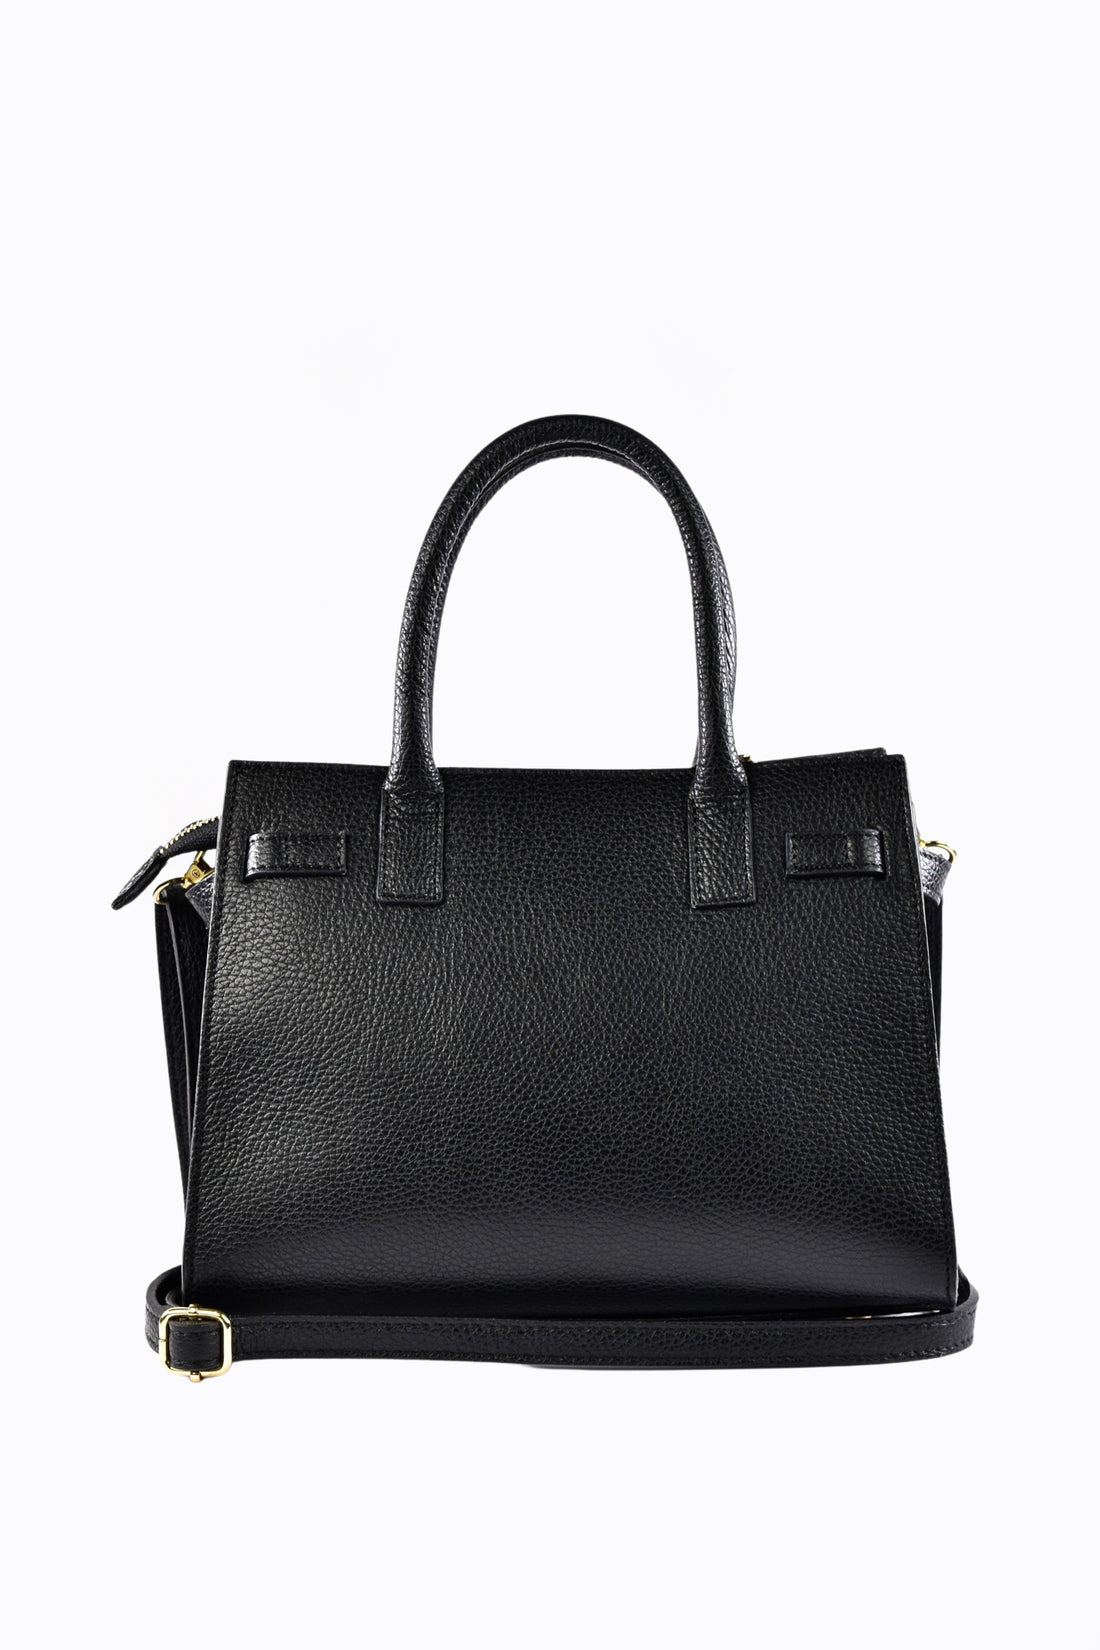 Grace bag in black dollar leather